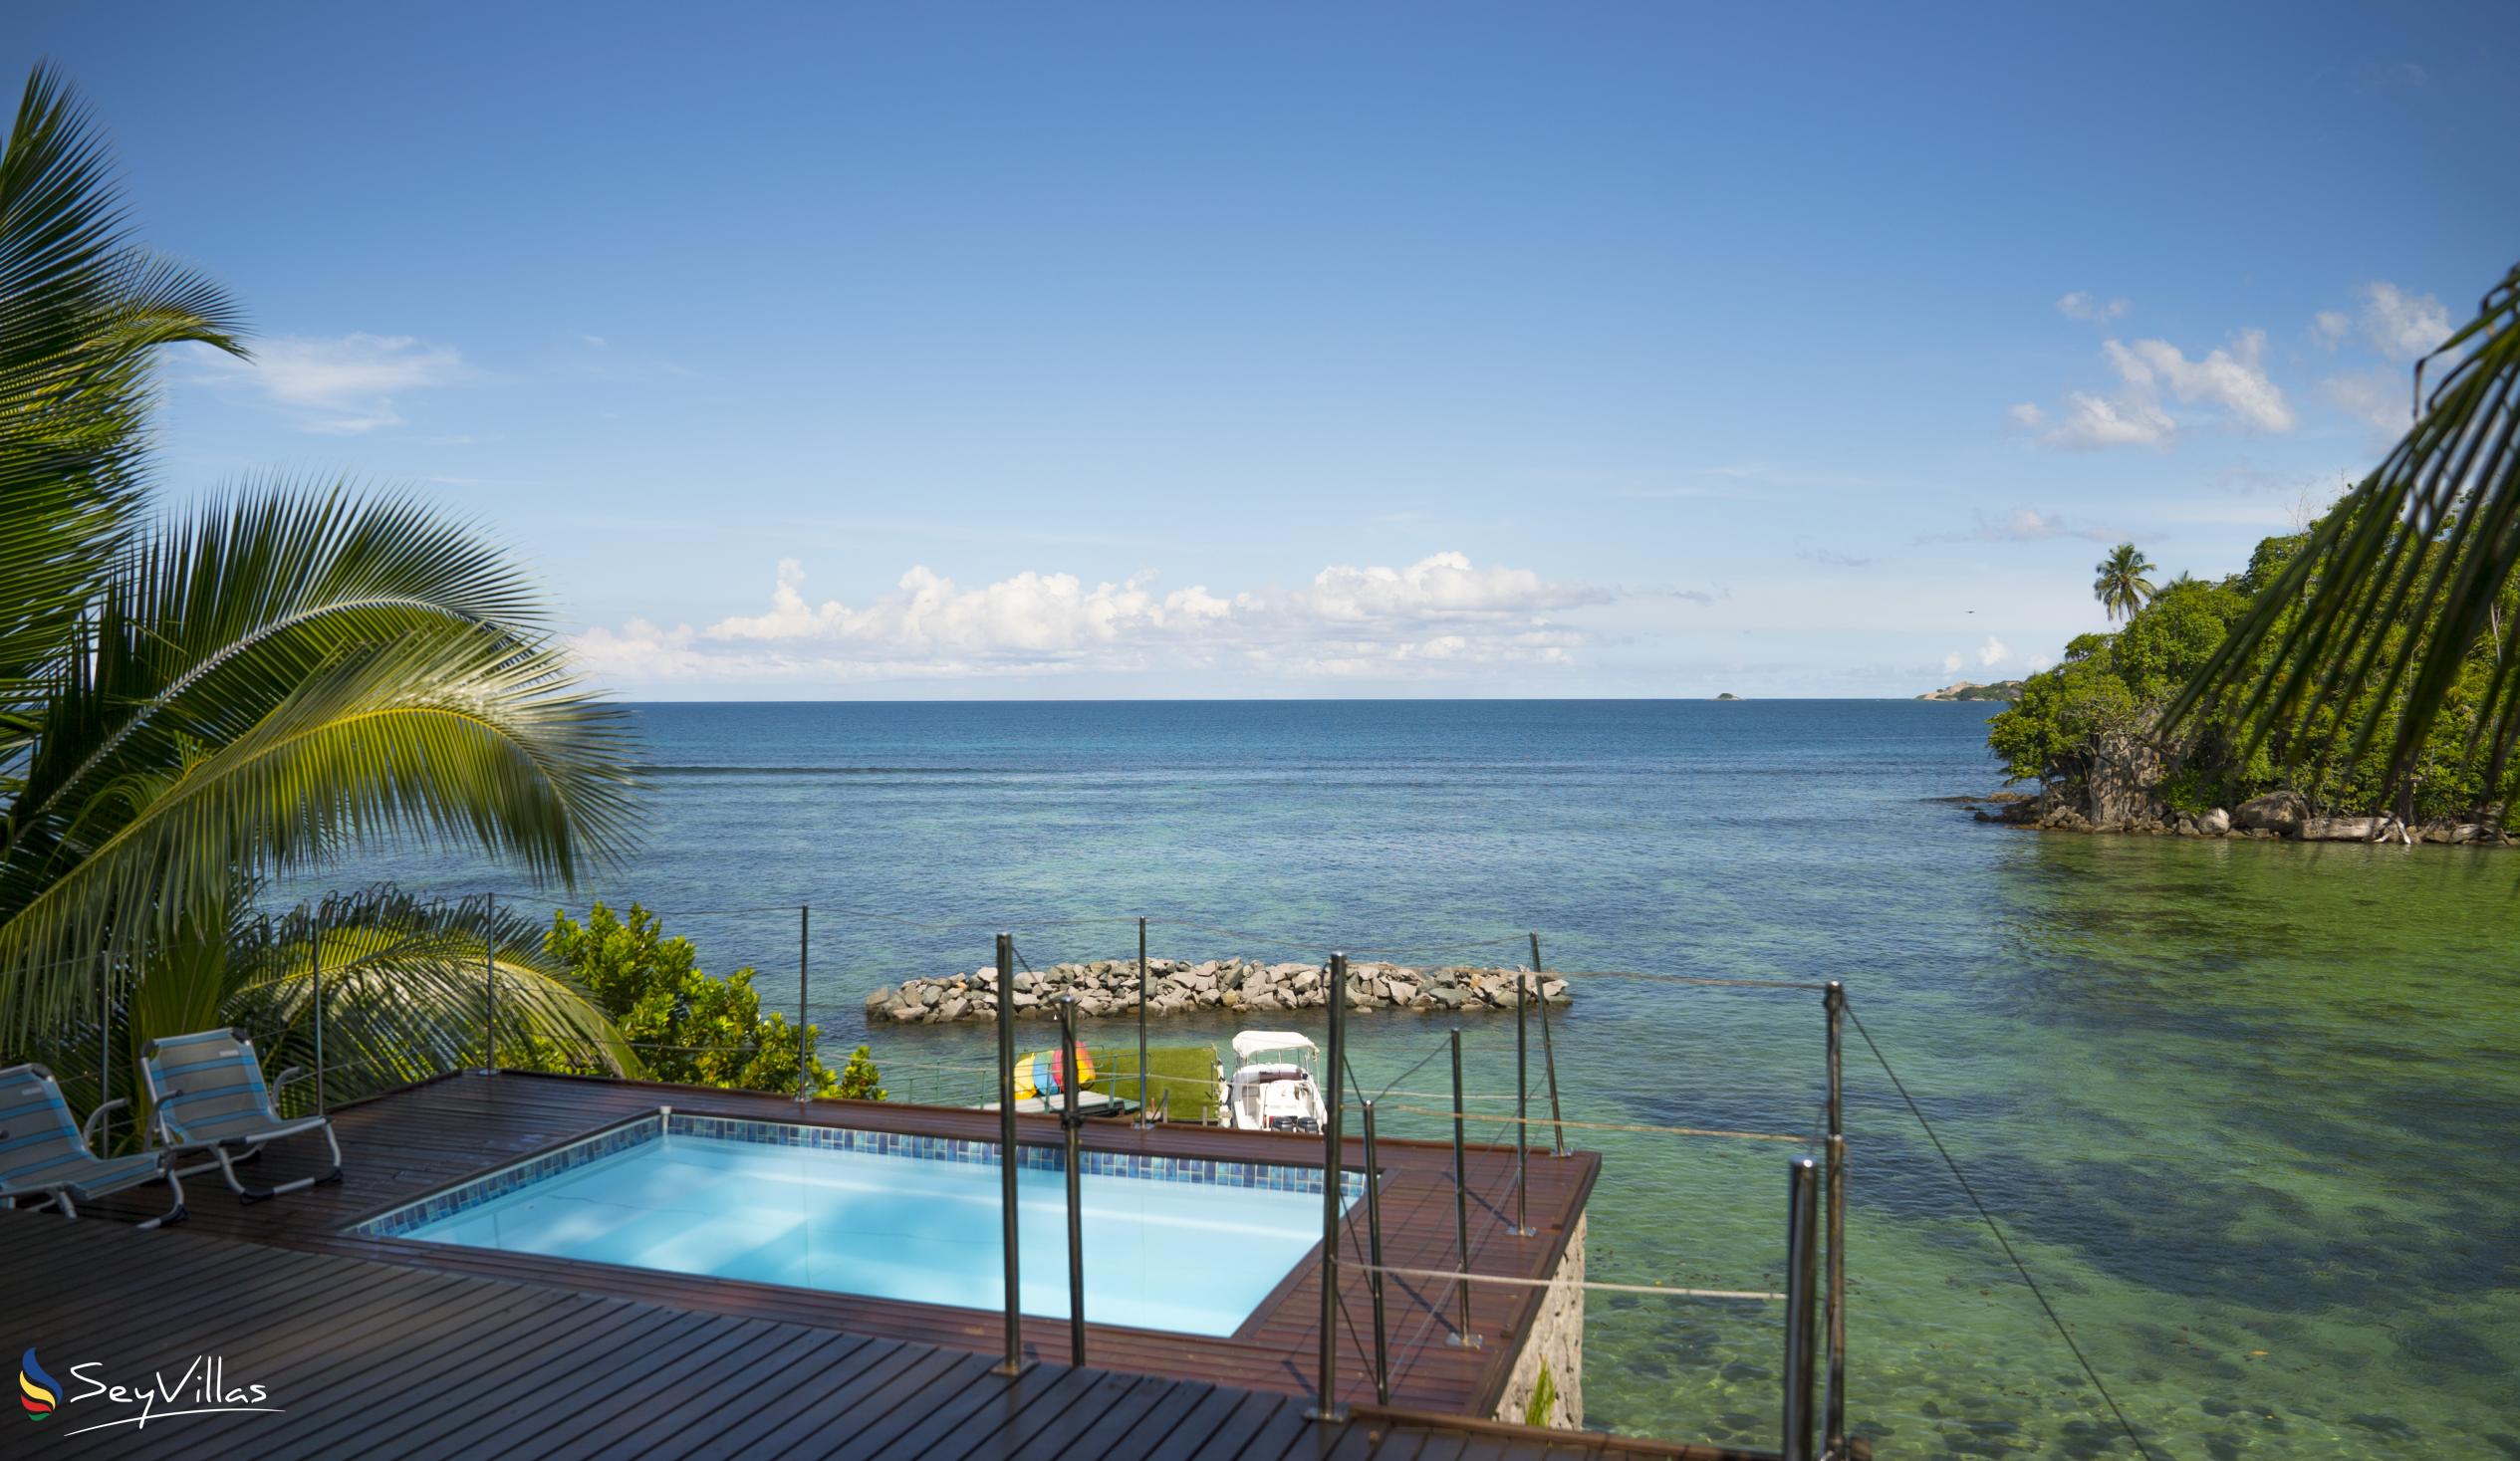 Foto 55: South Point Villas - Villa Cove - Cerf Island (Seychellen)